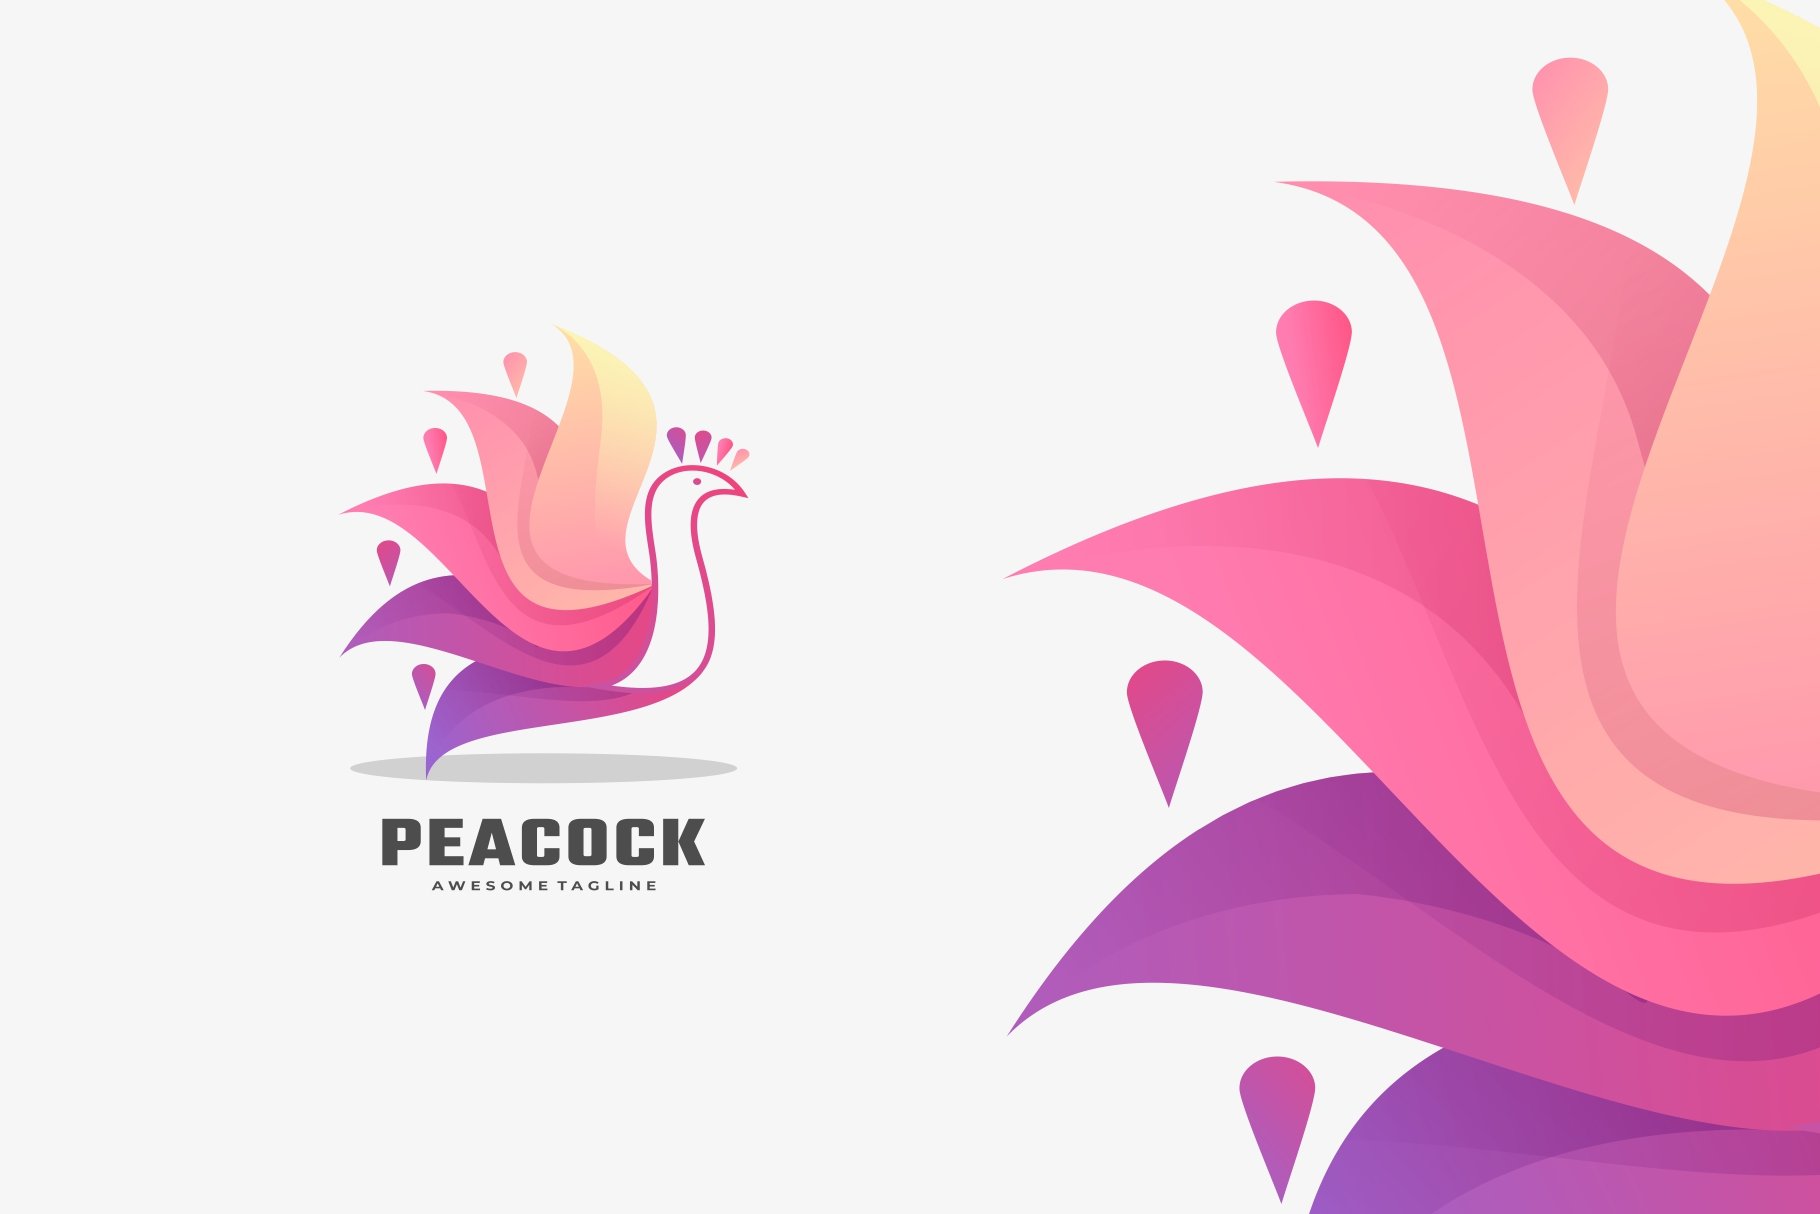 Peacock Gradient Logo cover image.